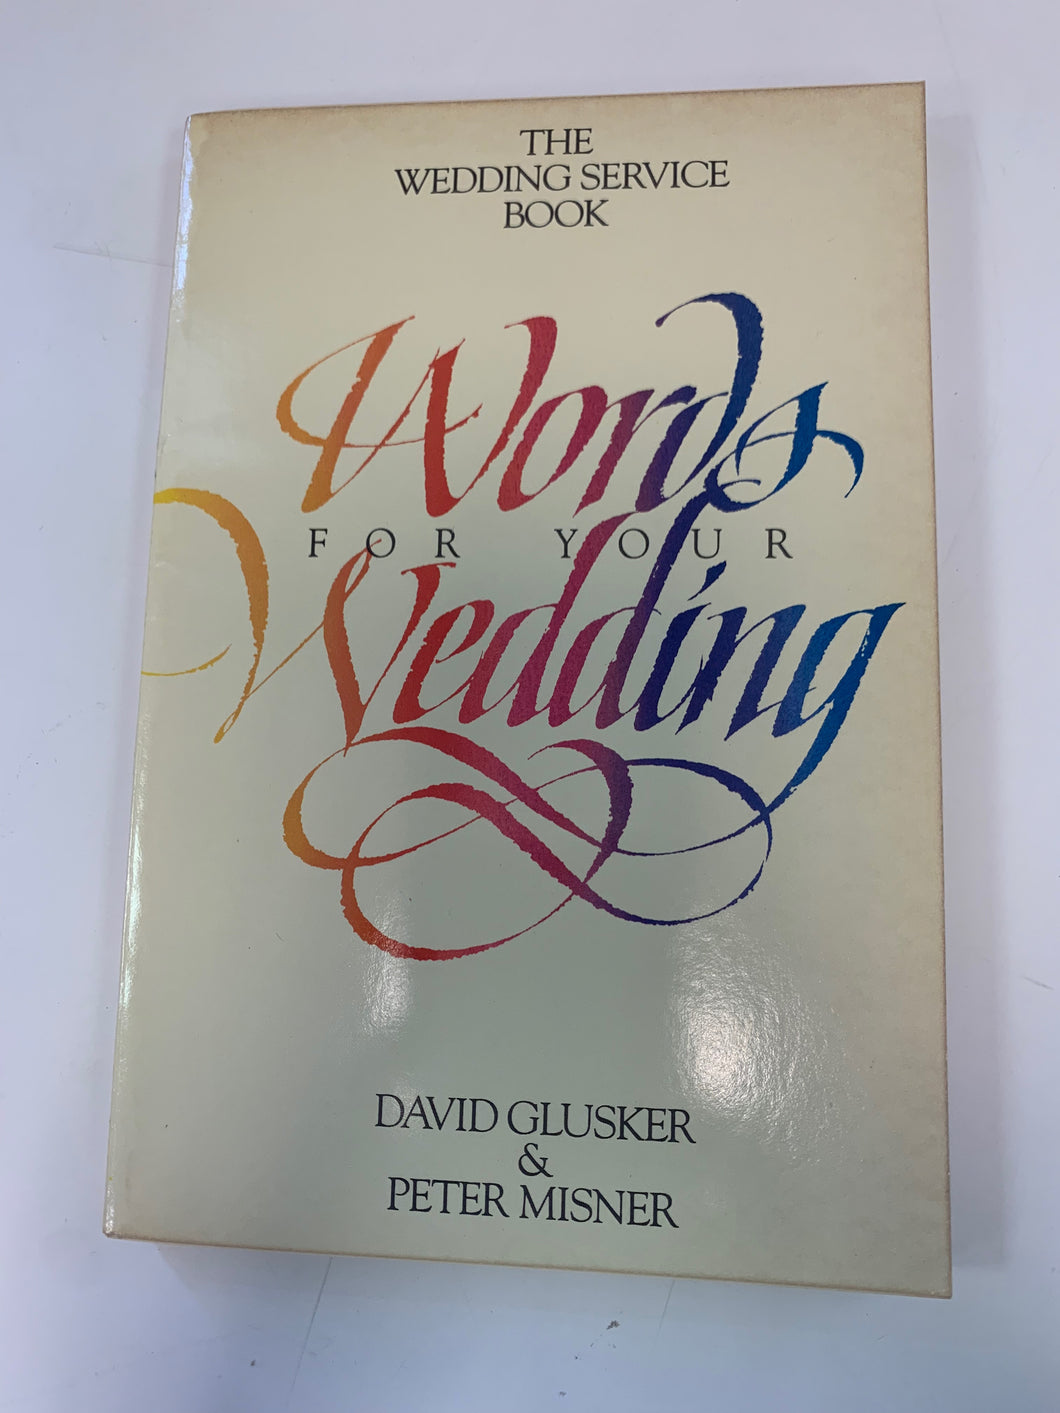 Words for Your Wedding by David Glusker & Peter Misner